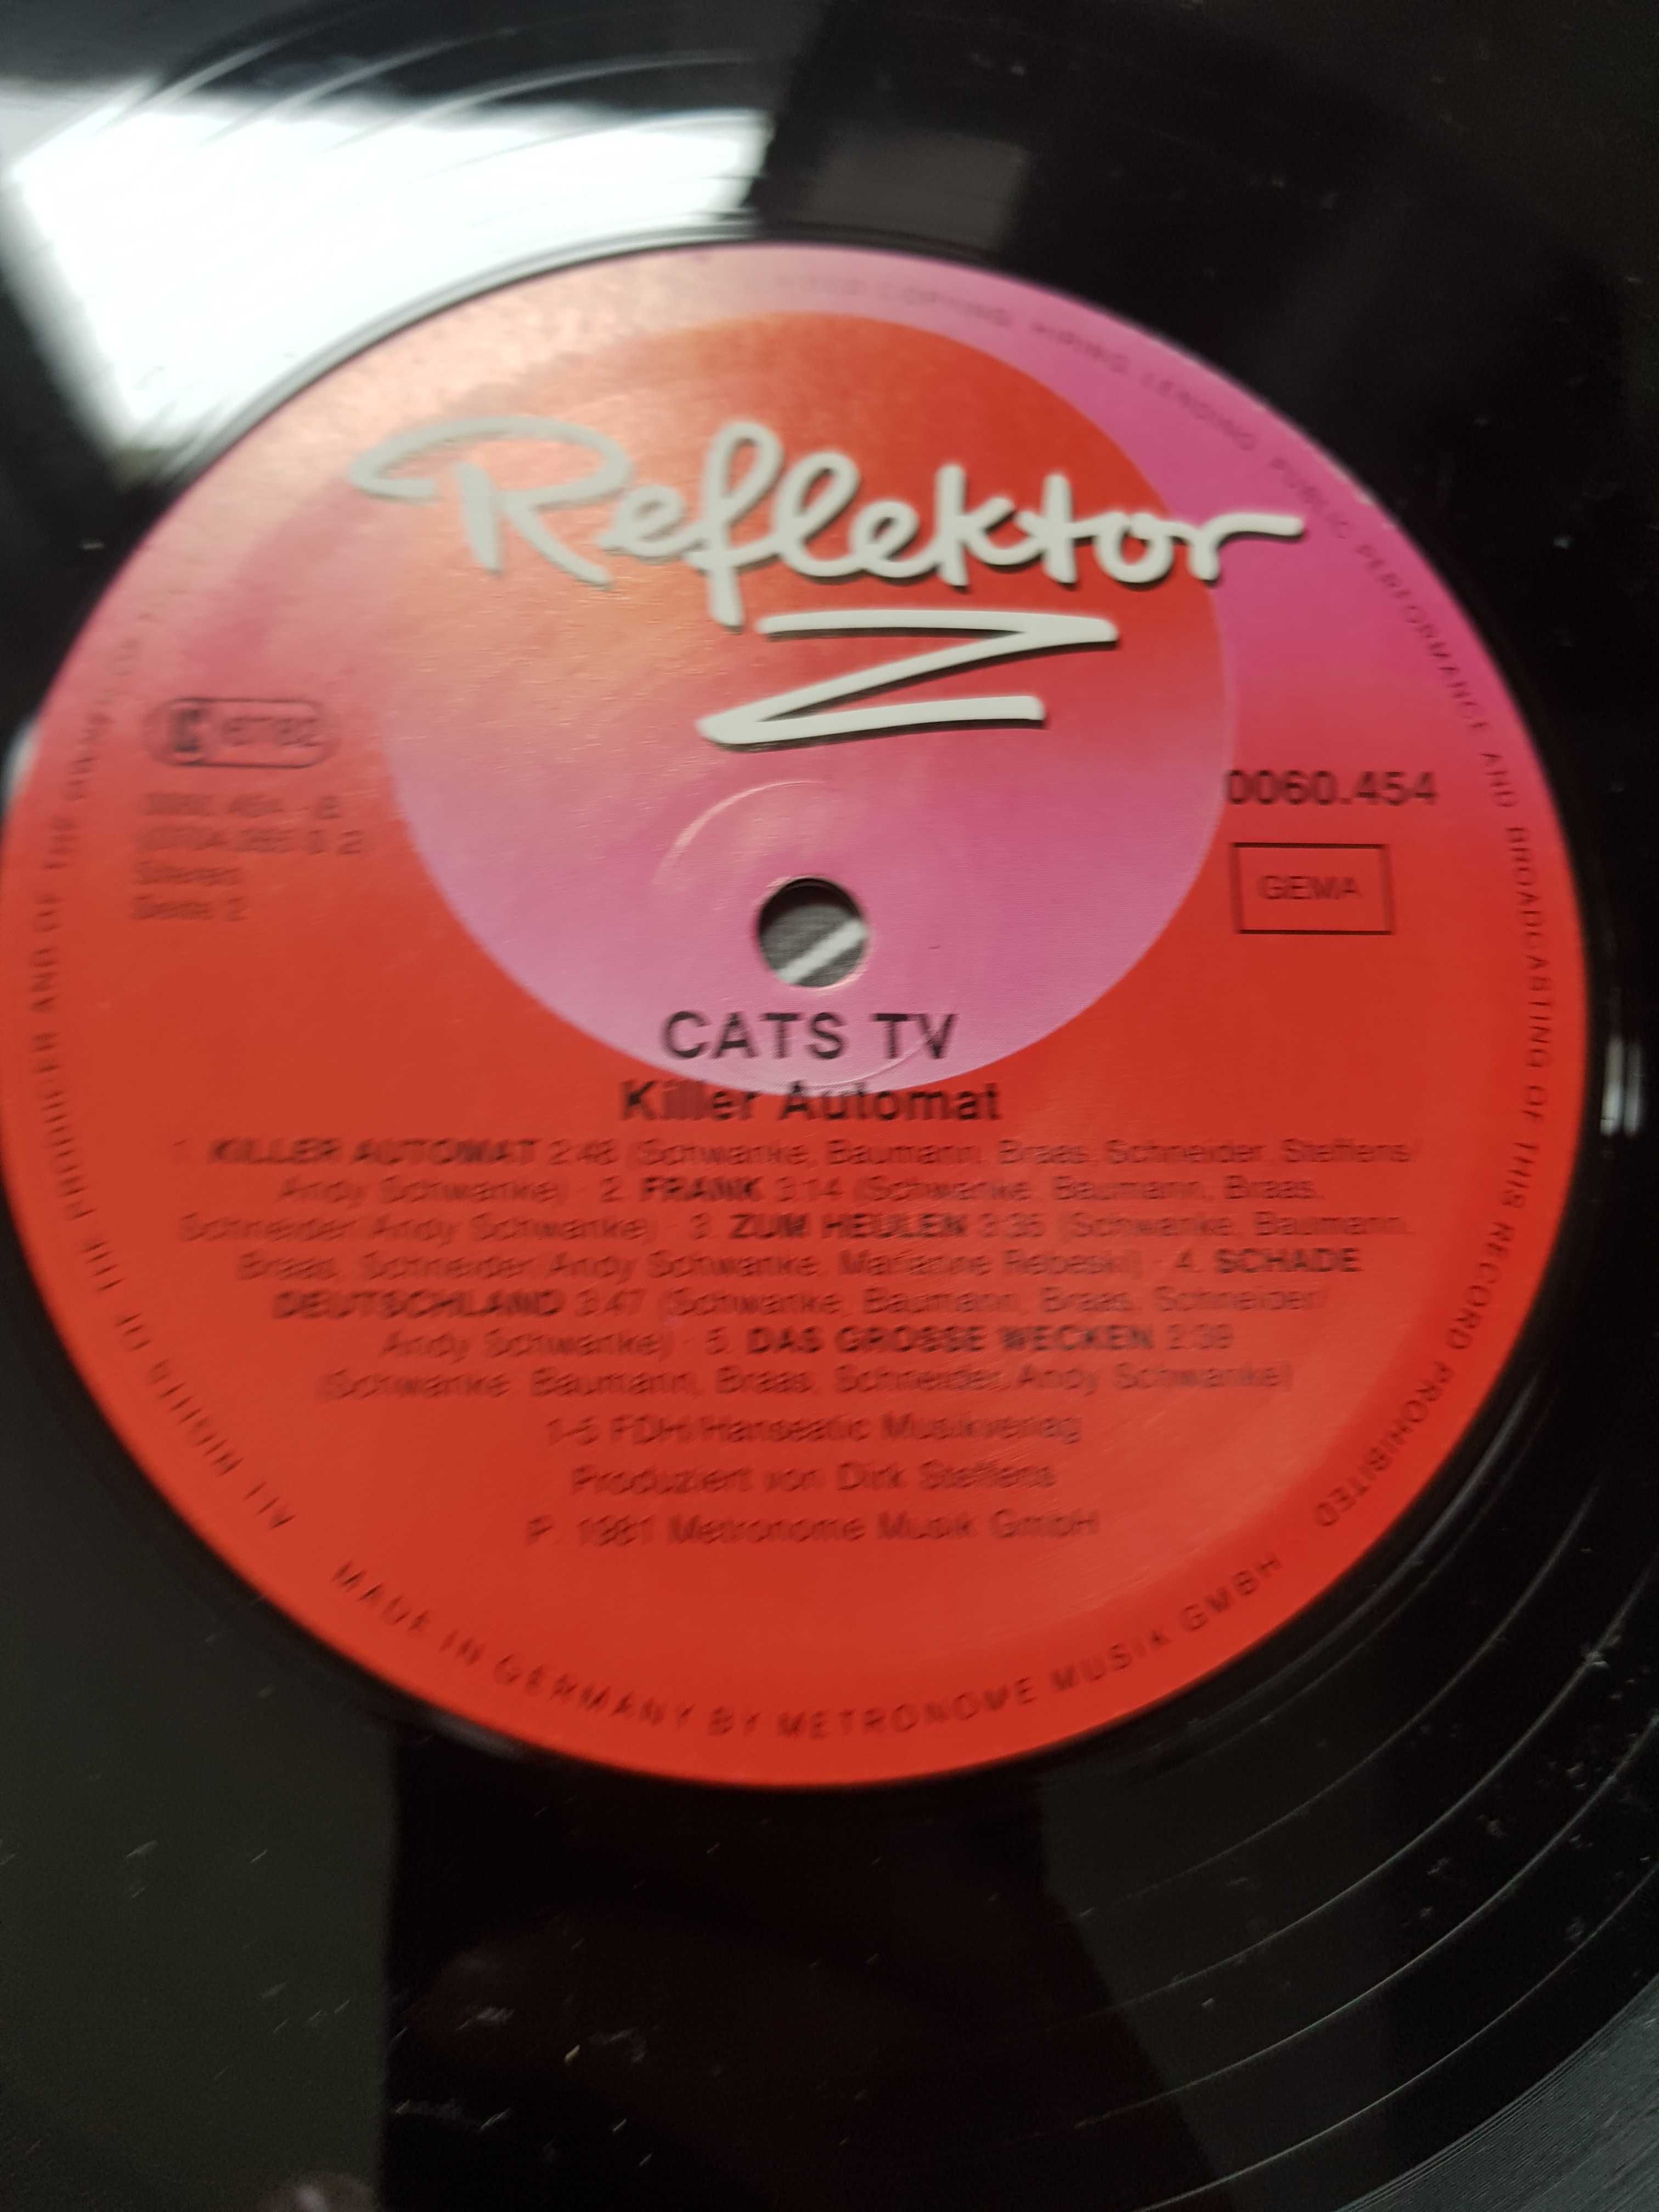 Cats TV ‎– Killerautomat LP*1720